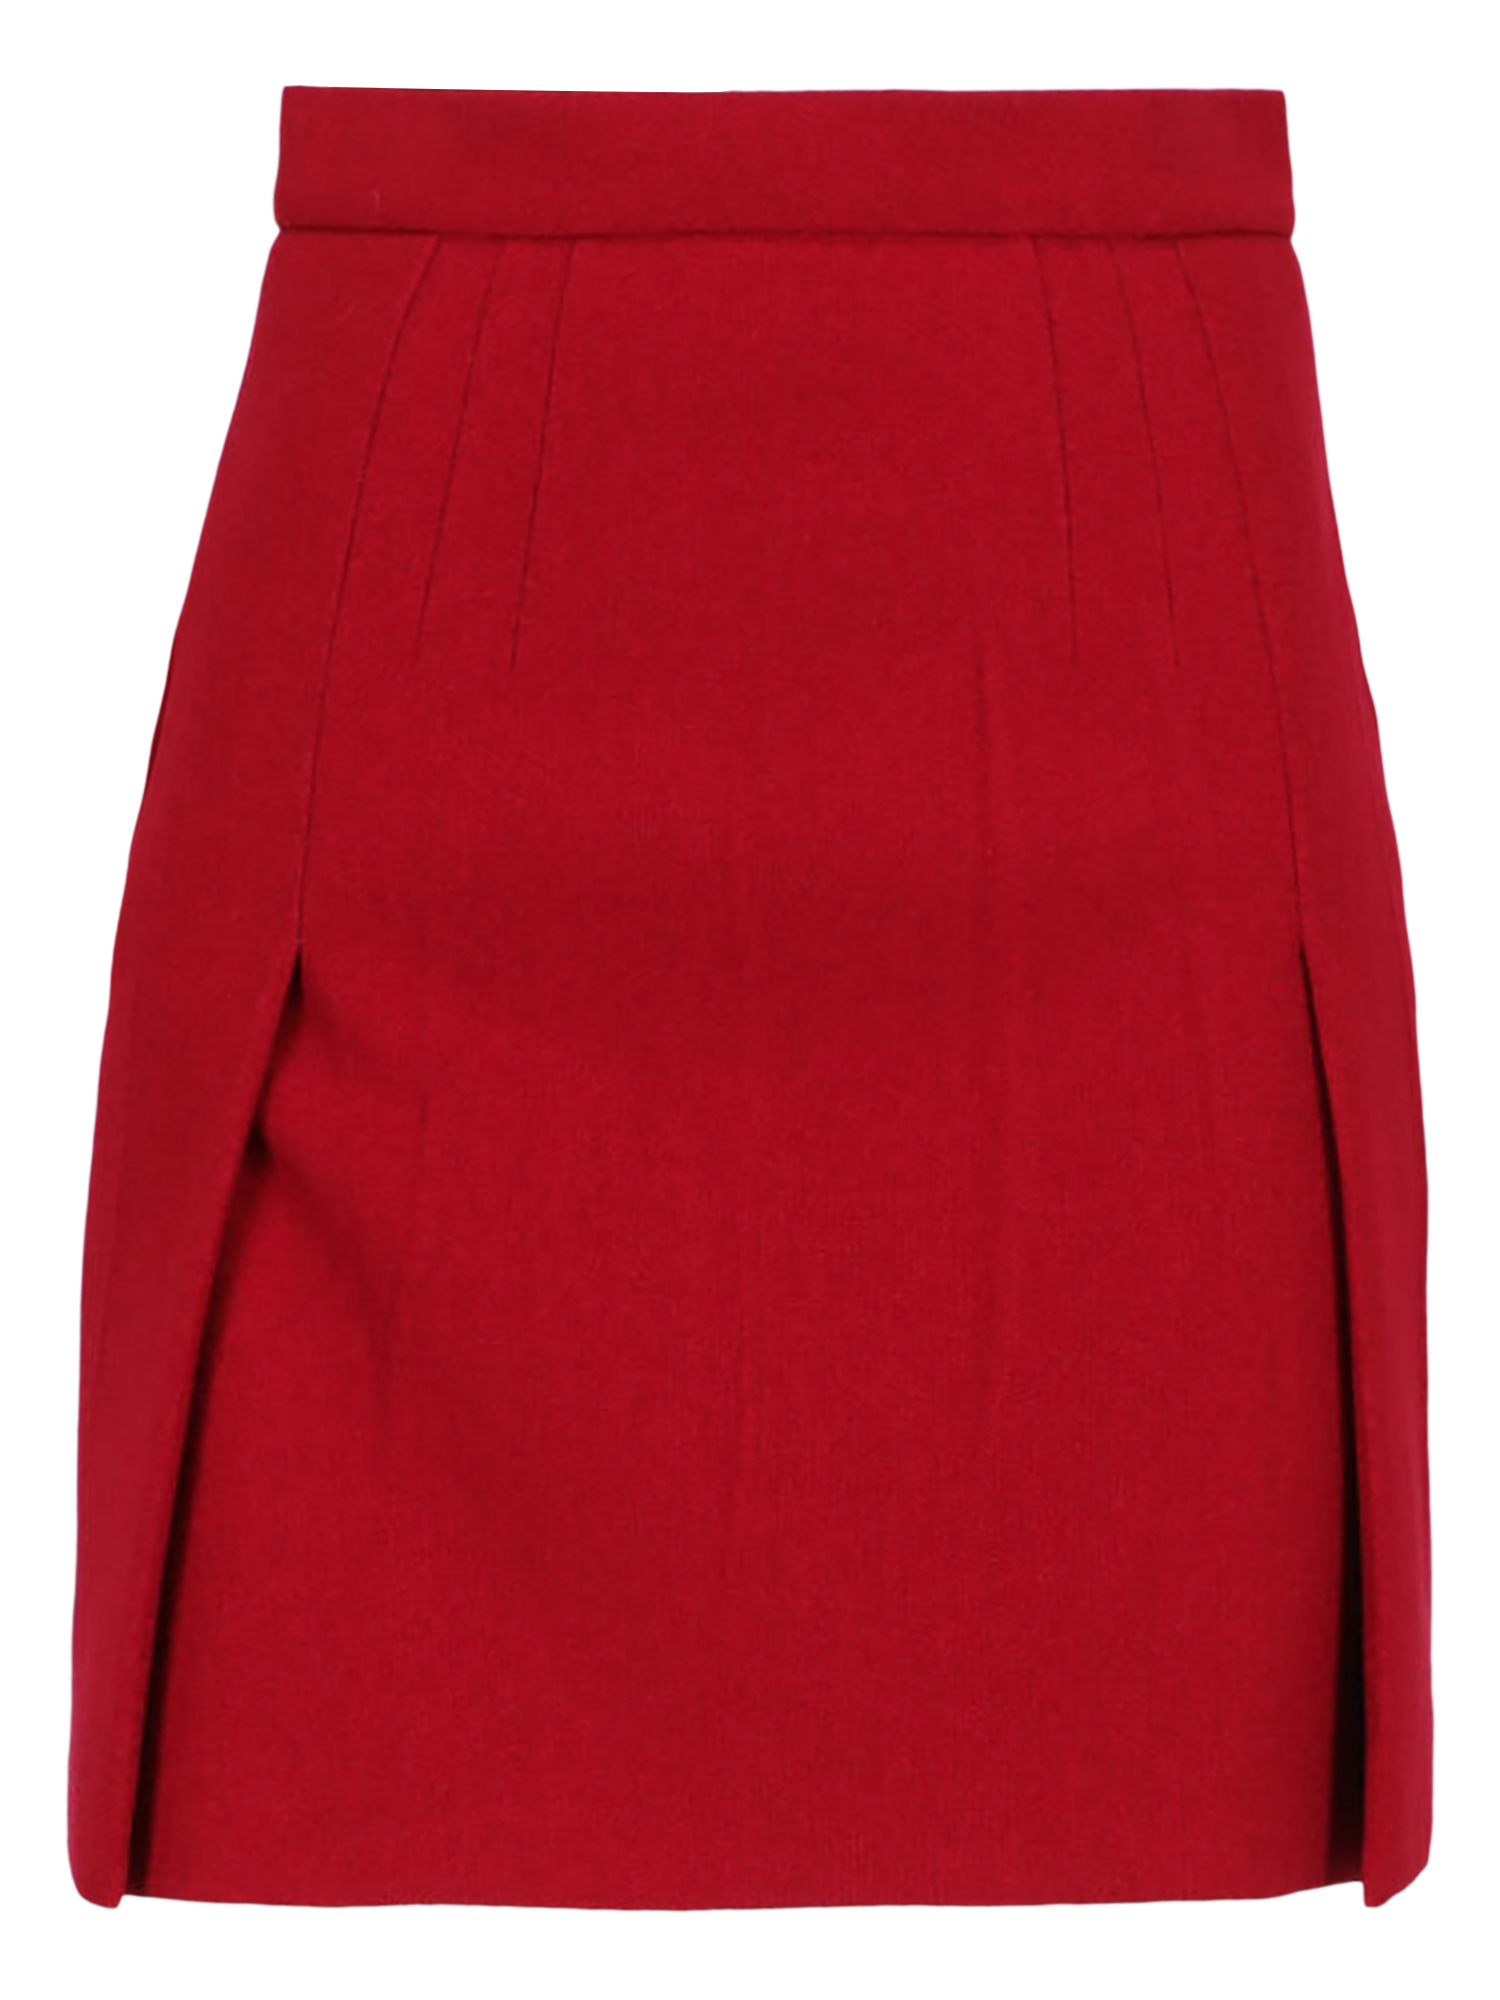 Jupes Pour Femme - Prada - En Wool Red - Taille:  -